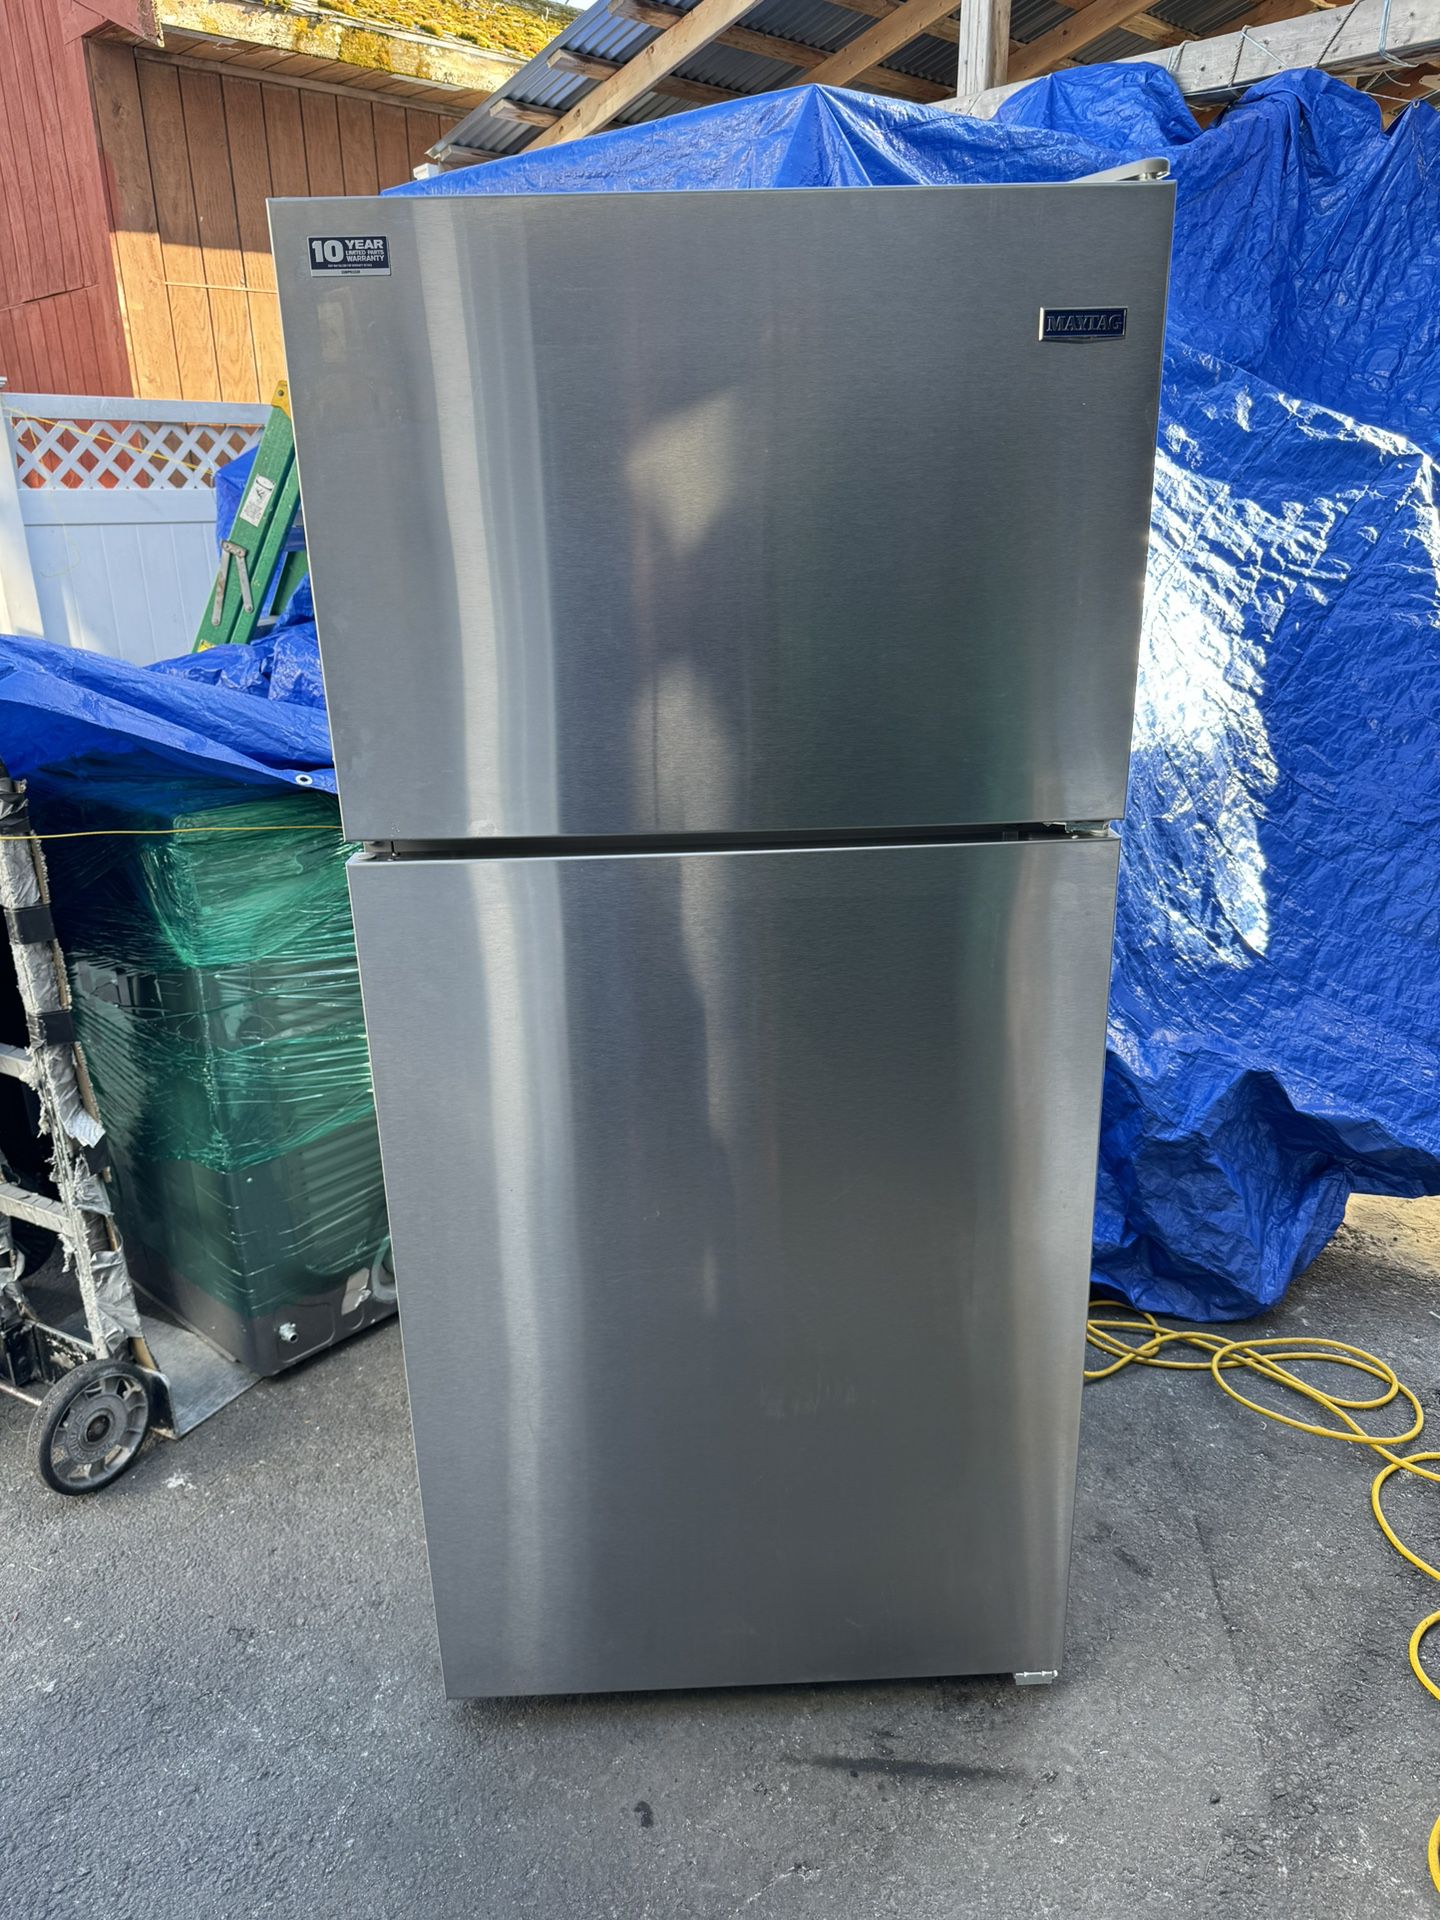 Maytag Refrigerator 30 X 66 Almost New One Receipt For 90 Days Warranty 